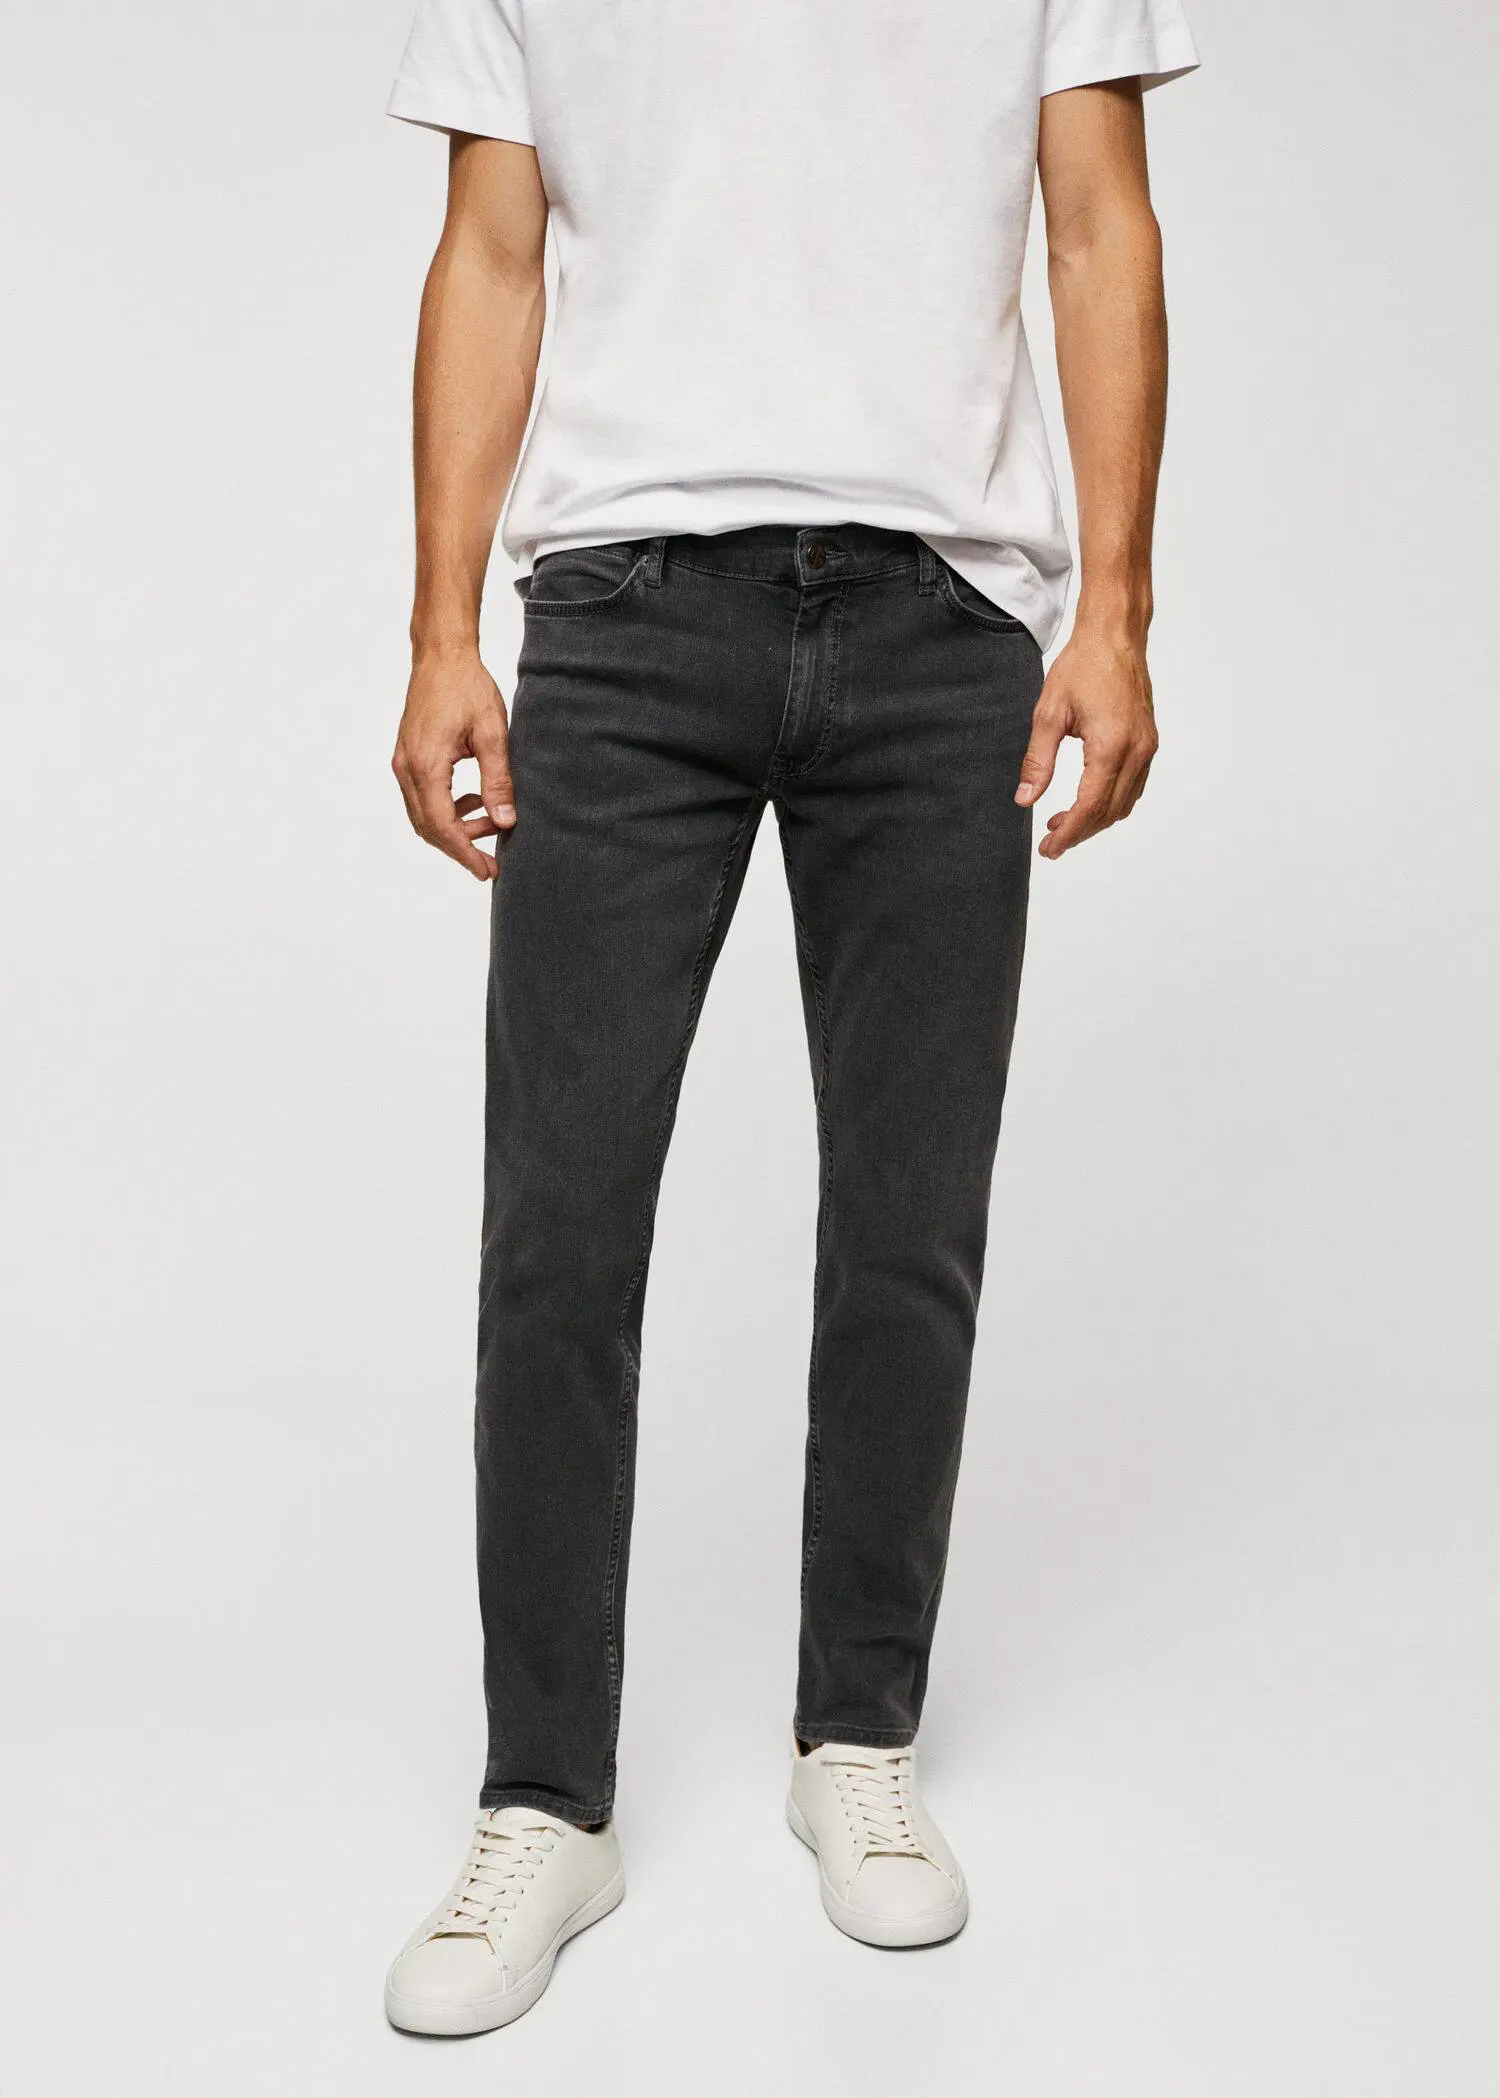 Mango Slim fit Ultra Soft Touch Patrick jeans. 2